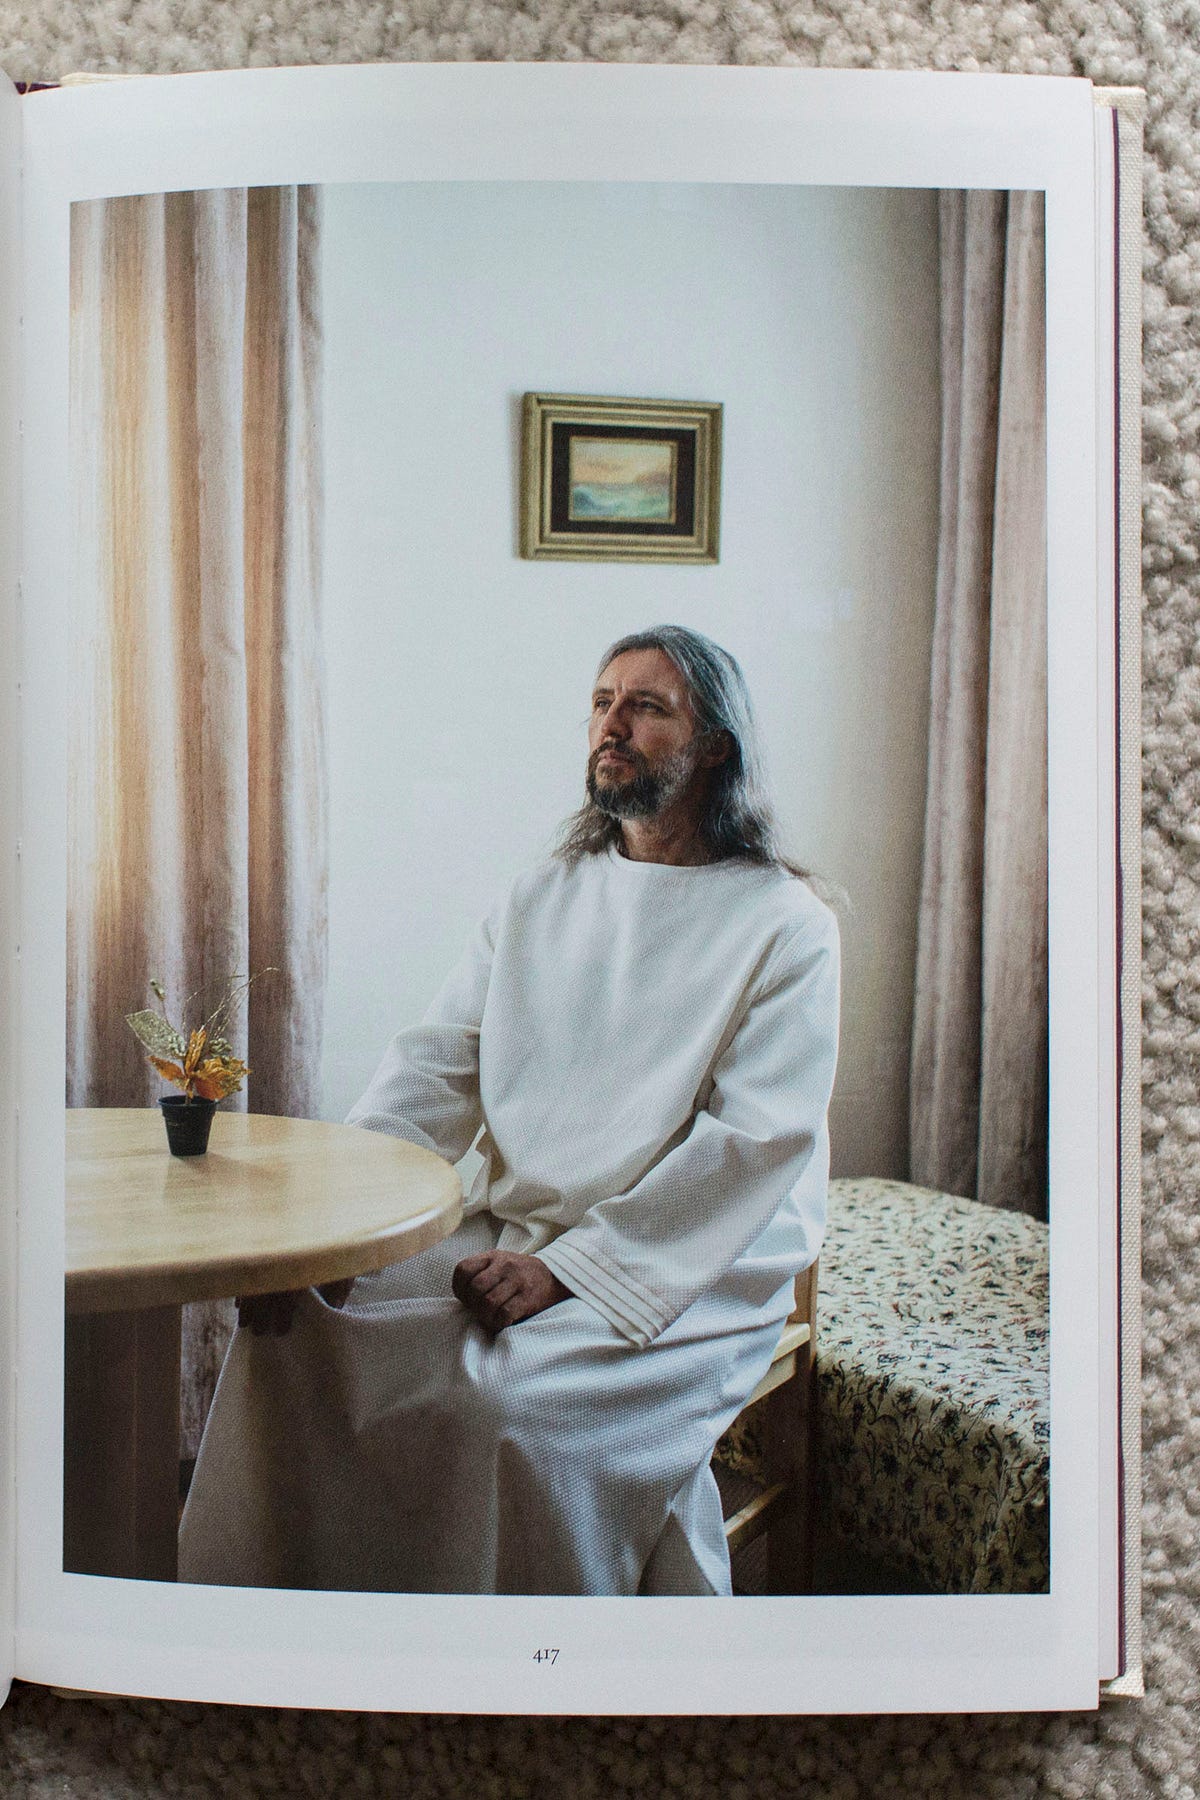 Viewing Jonas Bendiksen’s Photobook ‘The Last Testament’ as a Person of Faith